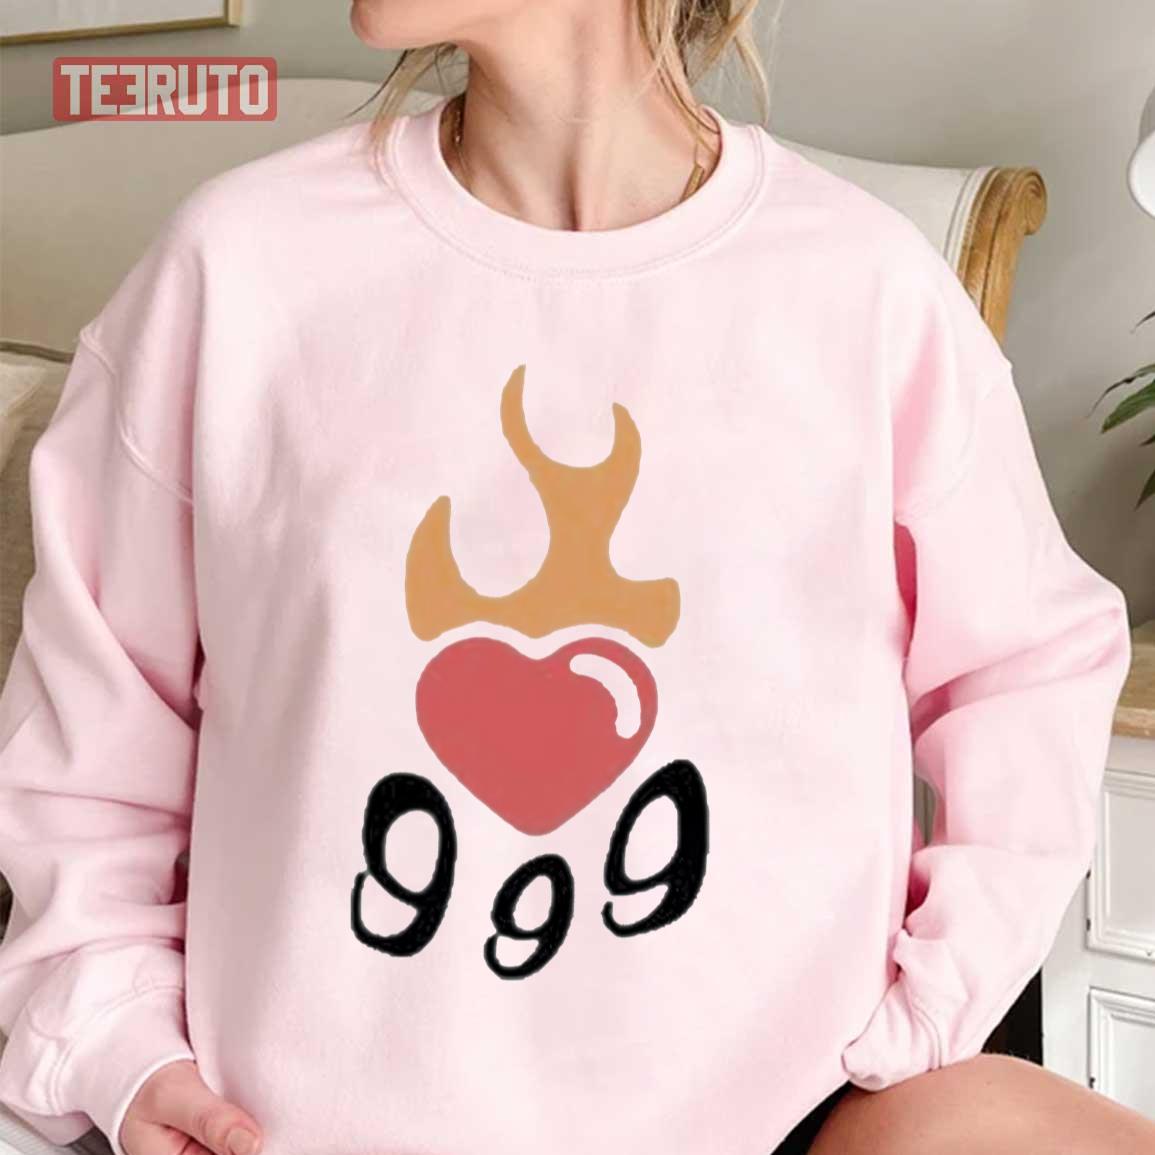 Juice Wrld Death Merch 999 Burning Hearts  Unisex Sweatshirt